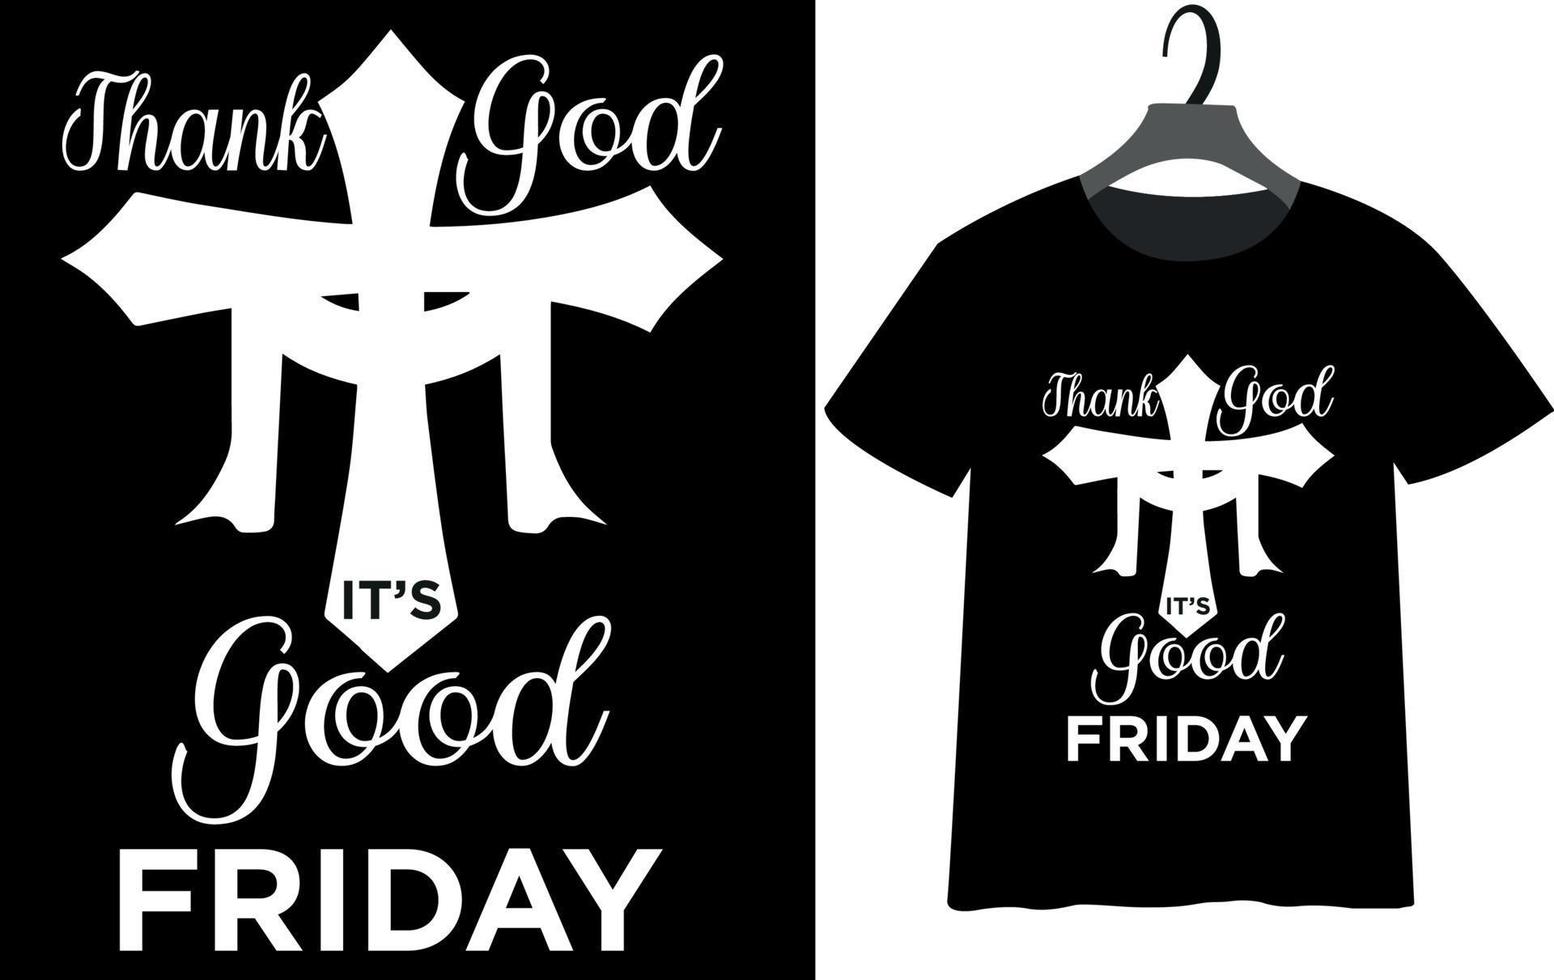 Good Friday t-shirt design vector